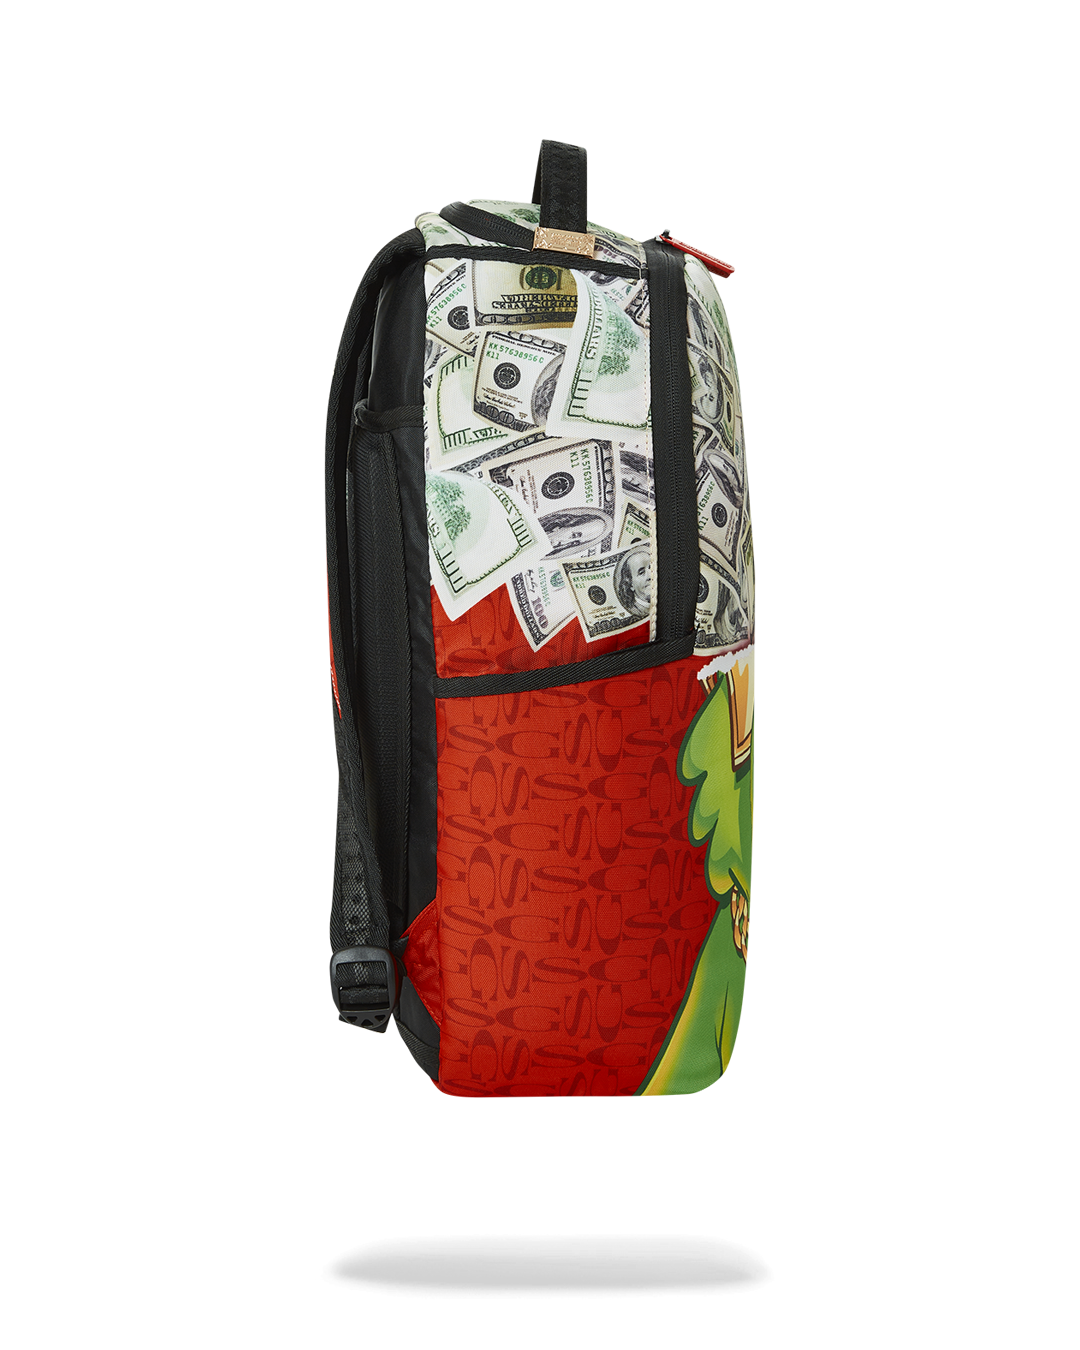 Sprayground - Unisex Adult Money Powder Shark Backpack